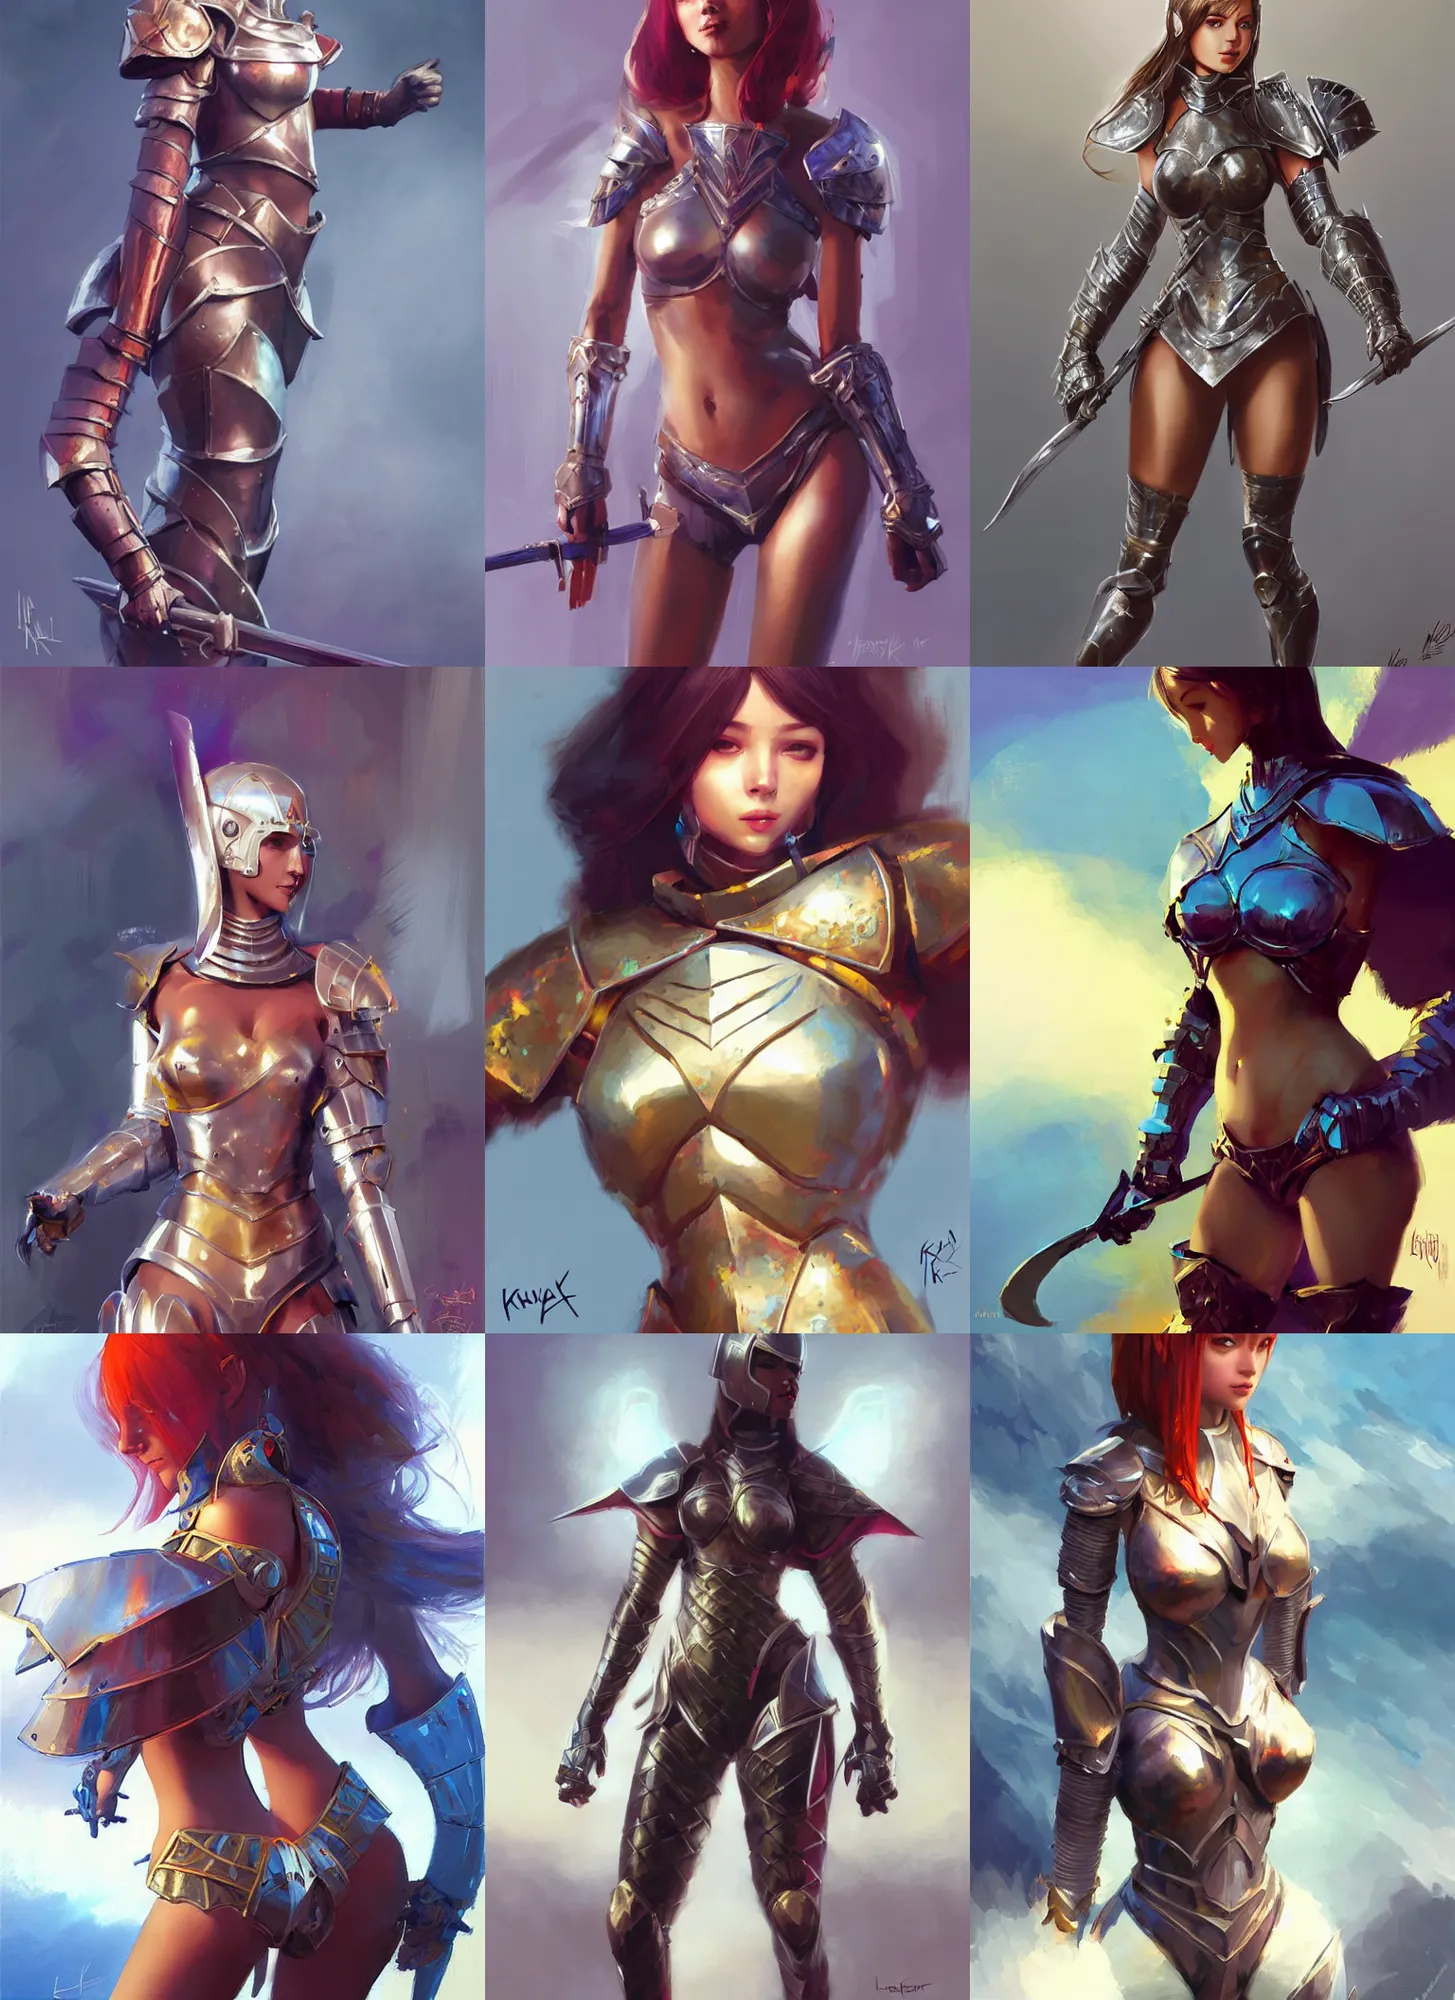 Prompt: bikini armor female knight, elegant, vibrant, fantasy, medieval, smooth, by ilya kuvshinov, craig mullins, artgerm